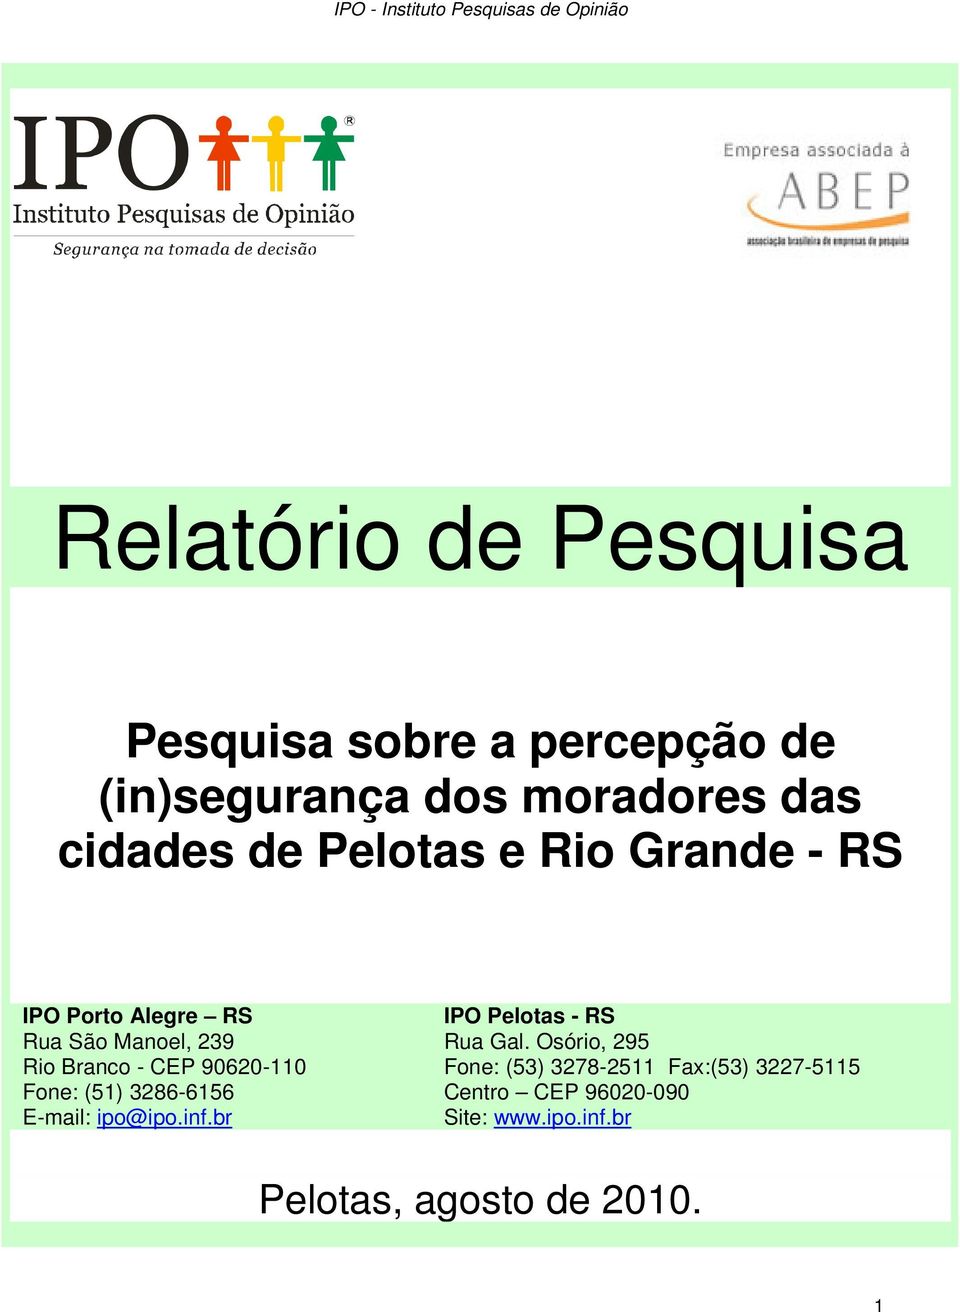 Branco - CEP 90620-110 Fone: (51) 3286-6156 E-mail: ipo@ipo.inf.br IPO Pelotas - RS Rua Gal.